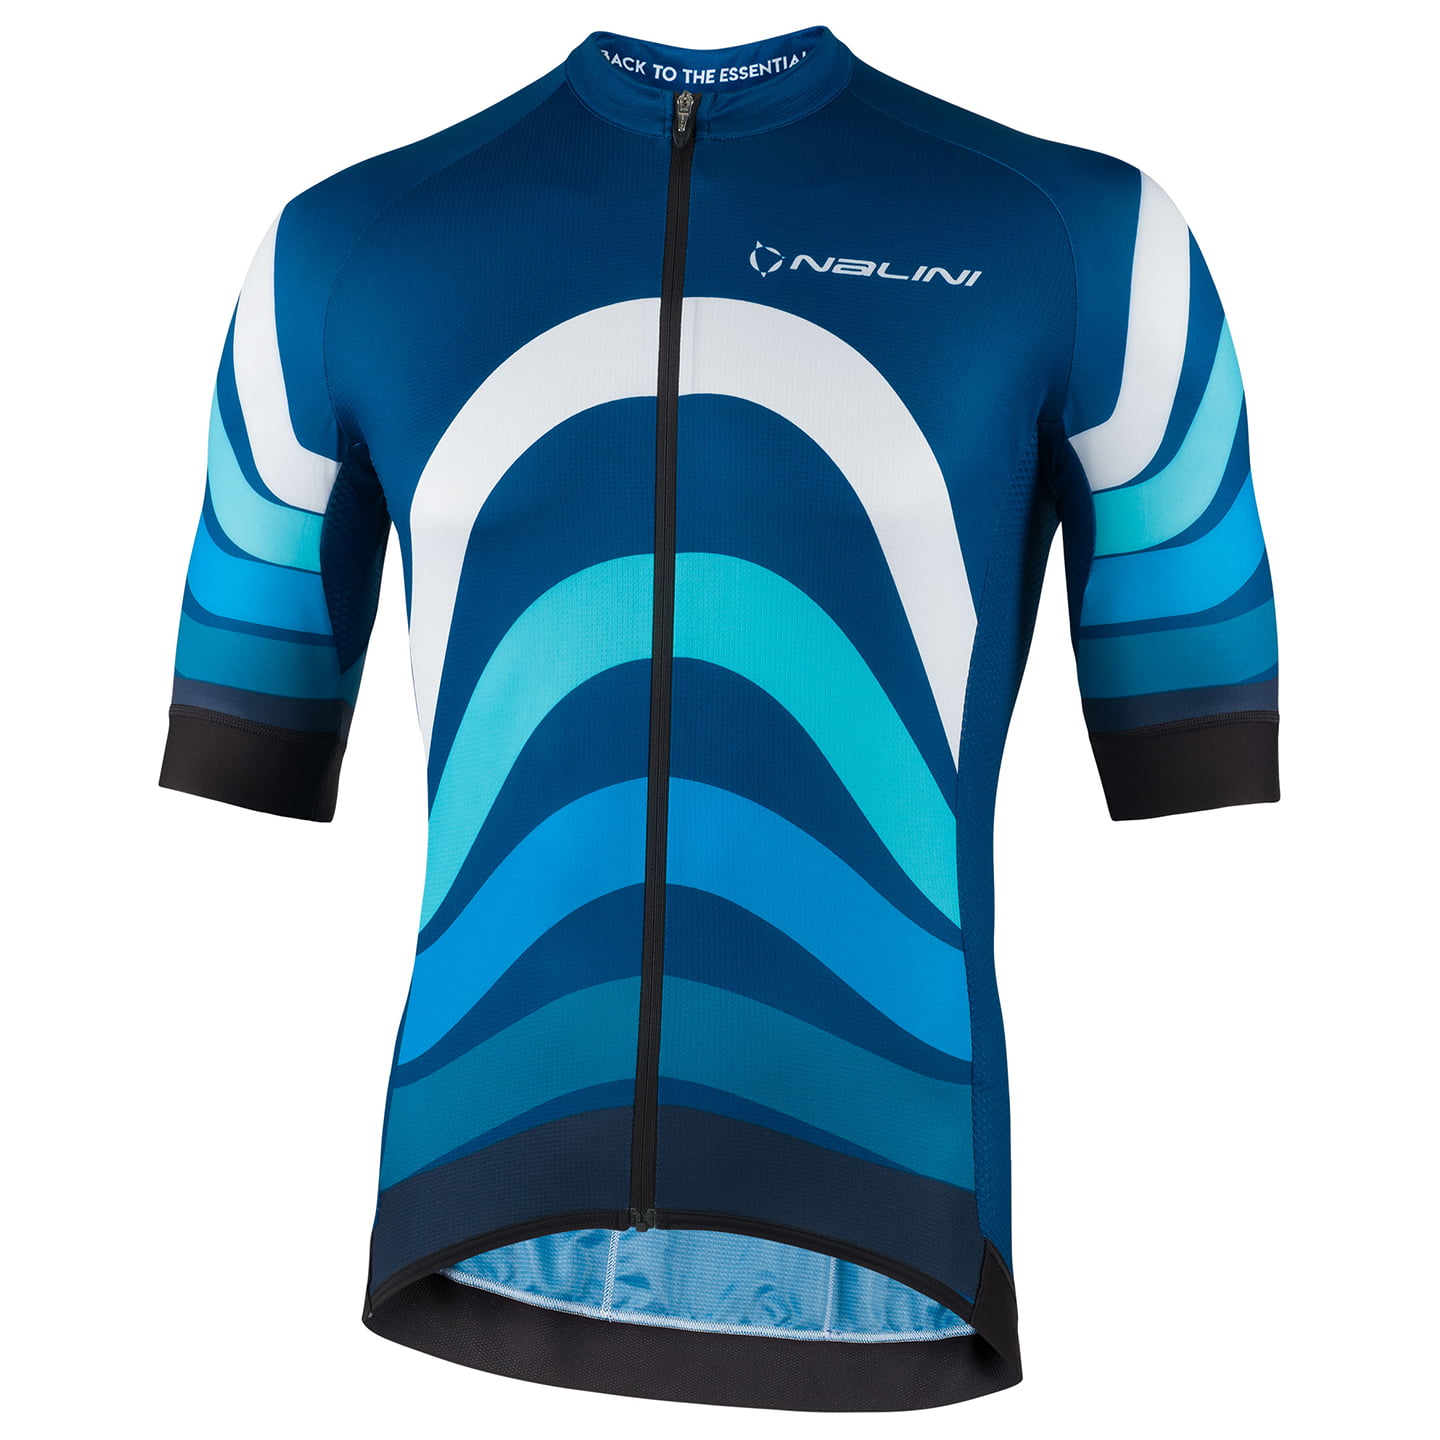 Bob Shop Nalini NALINI New Stripes Short Sleeve Jersey Short Sleeve Jersey, for men, size S, Cycling jersey, Cycling clothing